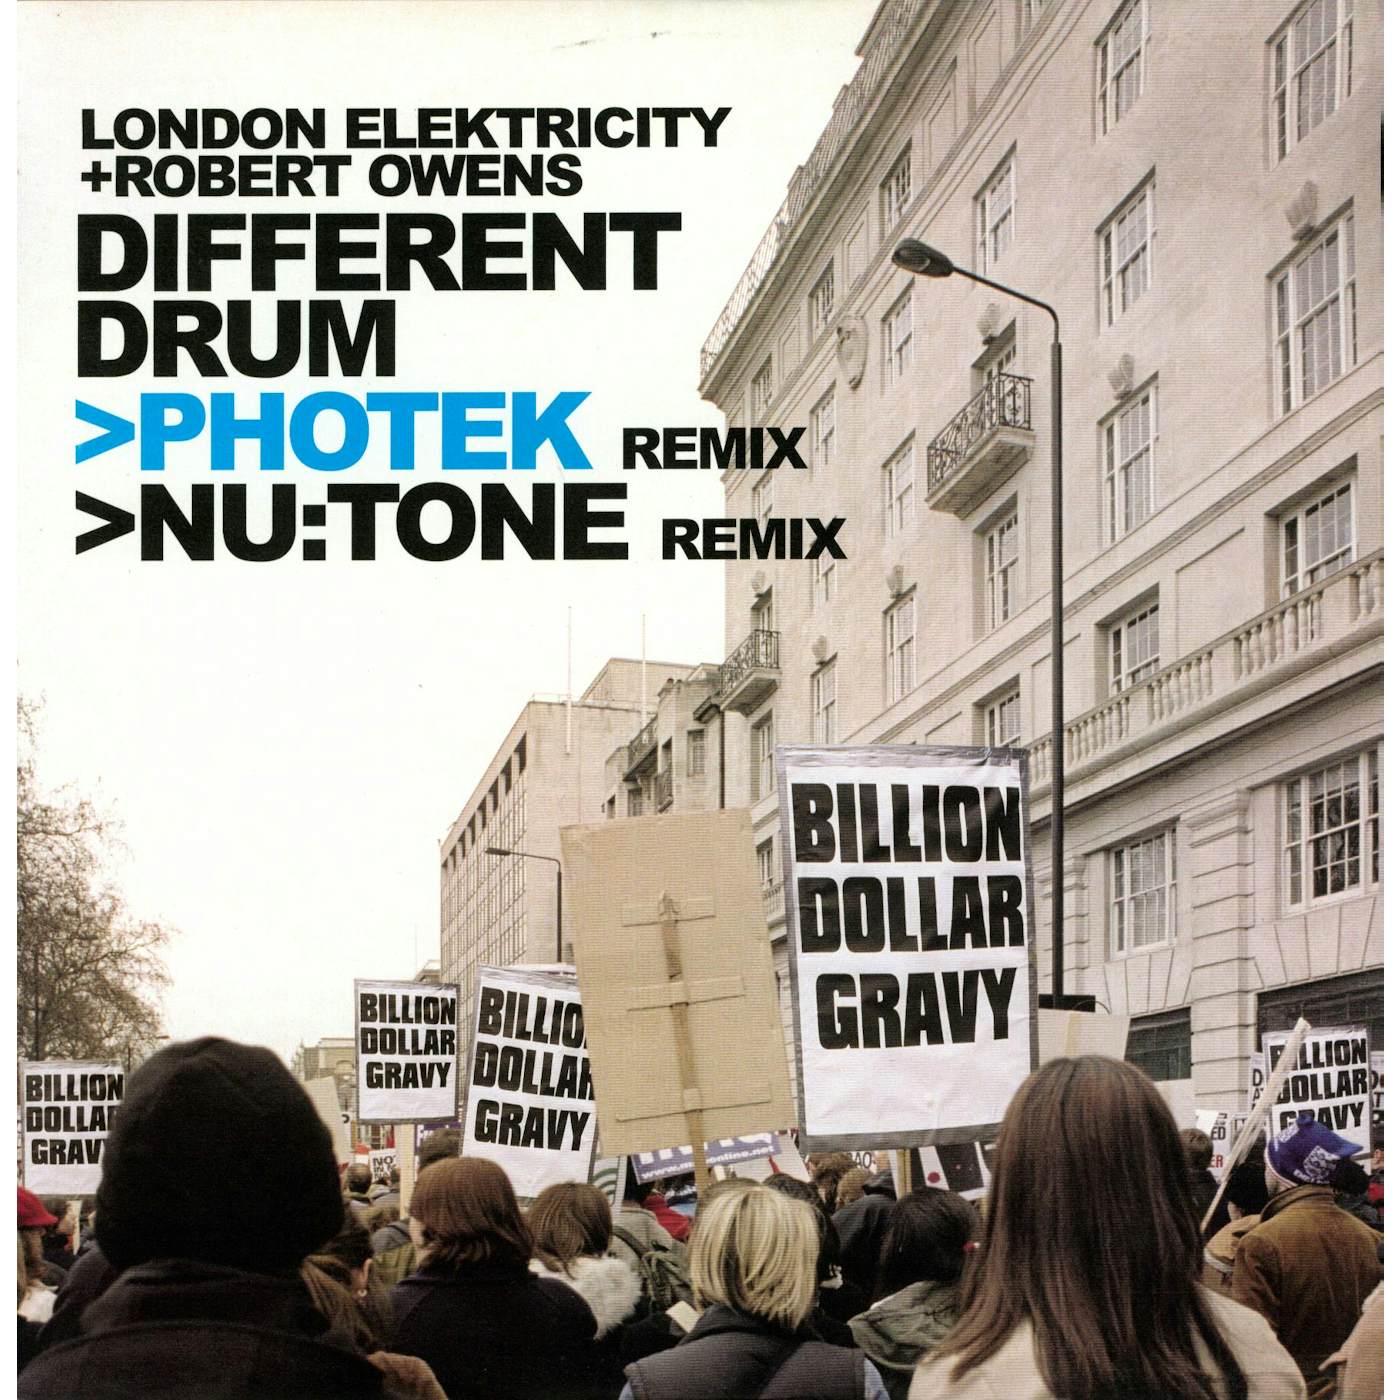 London Elektricity DIFFERENT DRUM Vinyl Record - UK Release